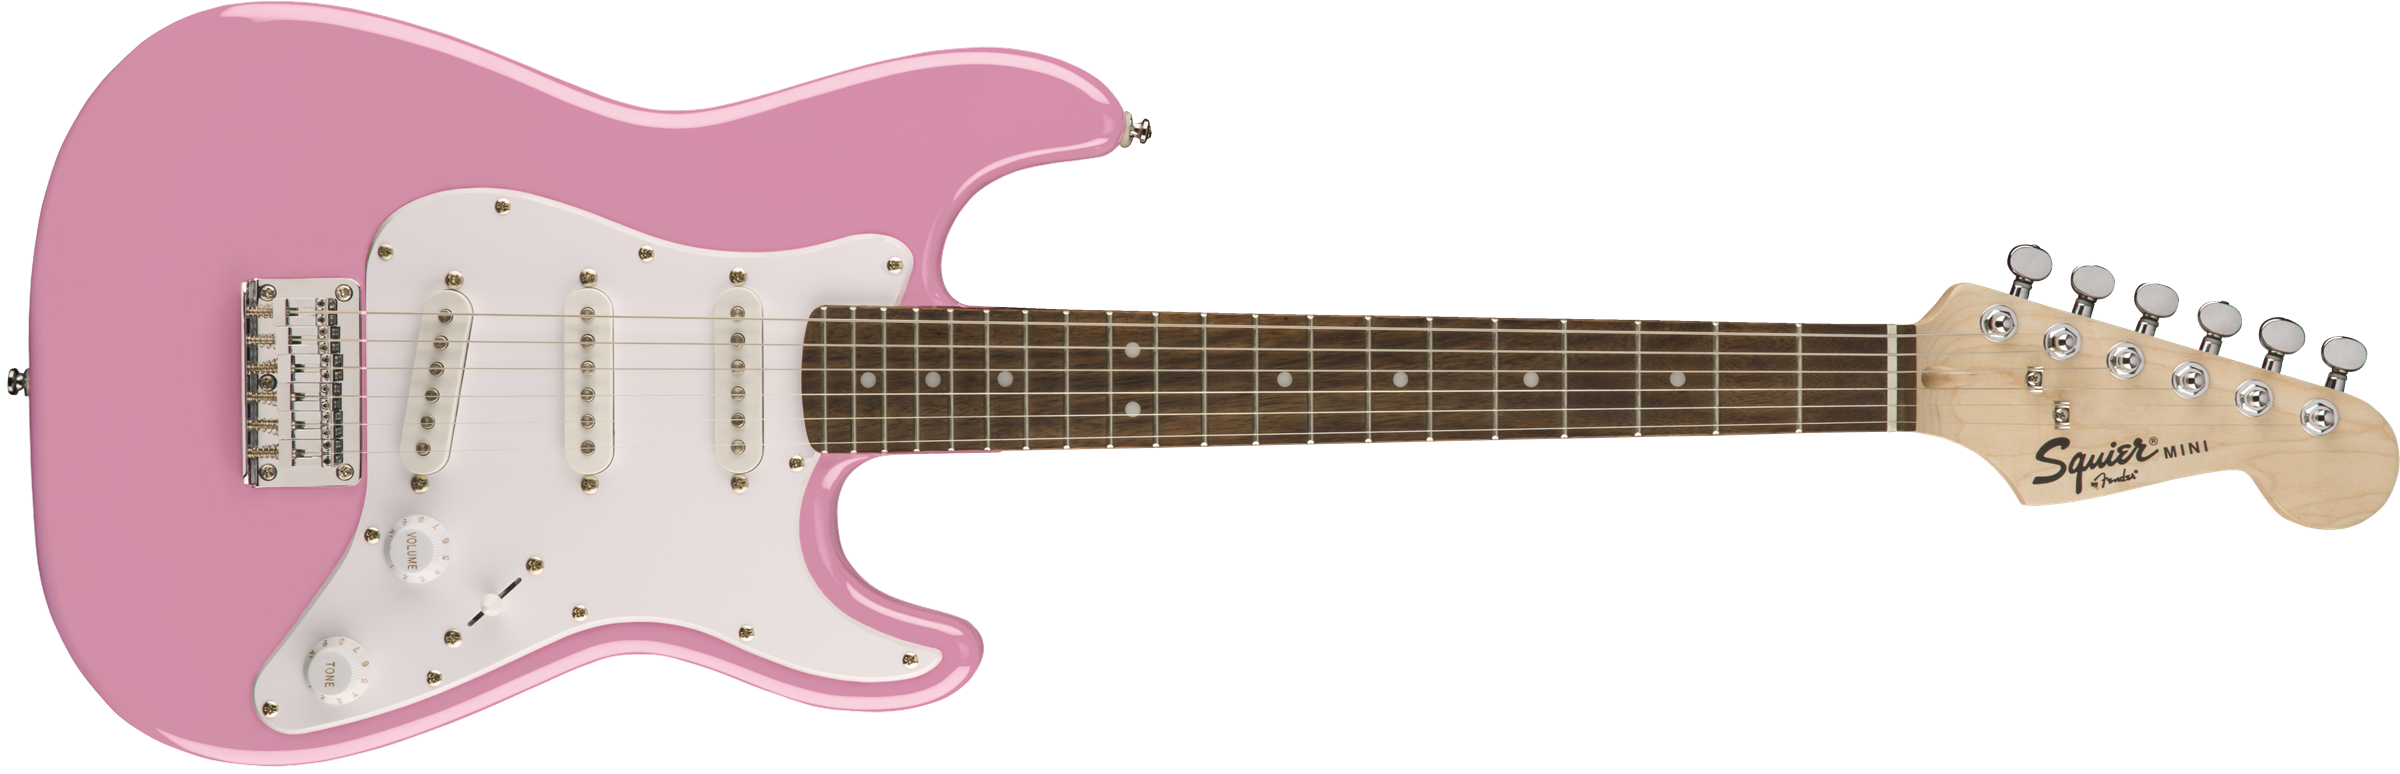 Squier Squier Mini Strat V2 Ht Sss Lau - Pink - Electric guitar for kids - Variation 1